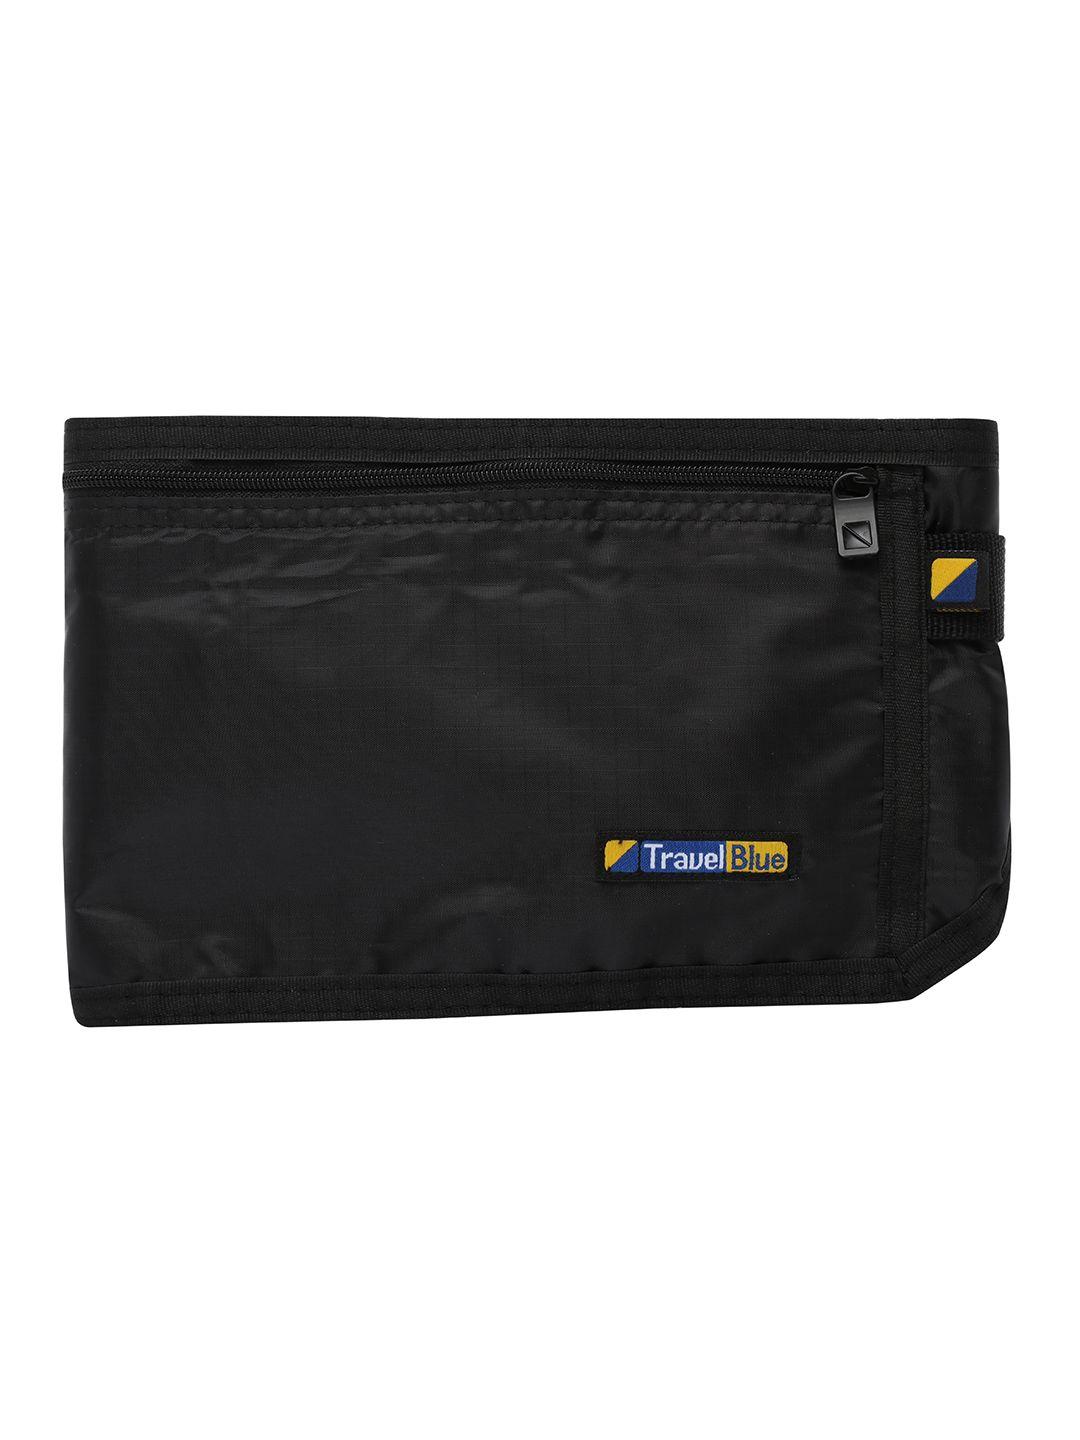 travel blue black travel belt pouch